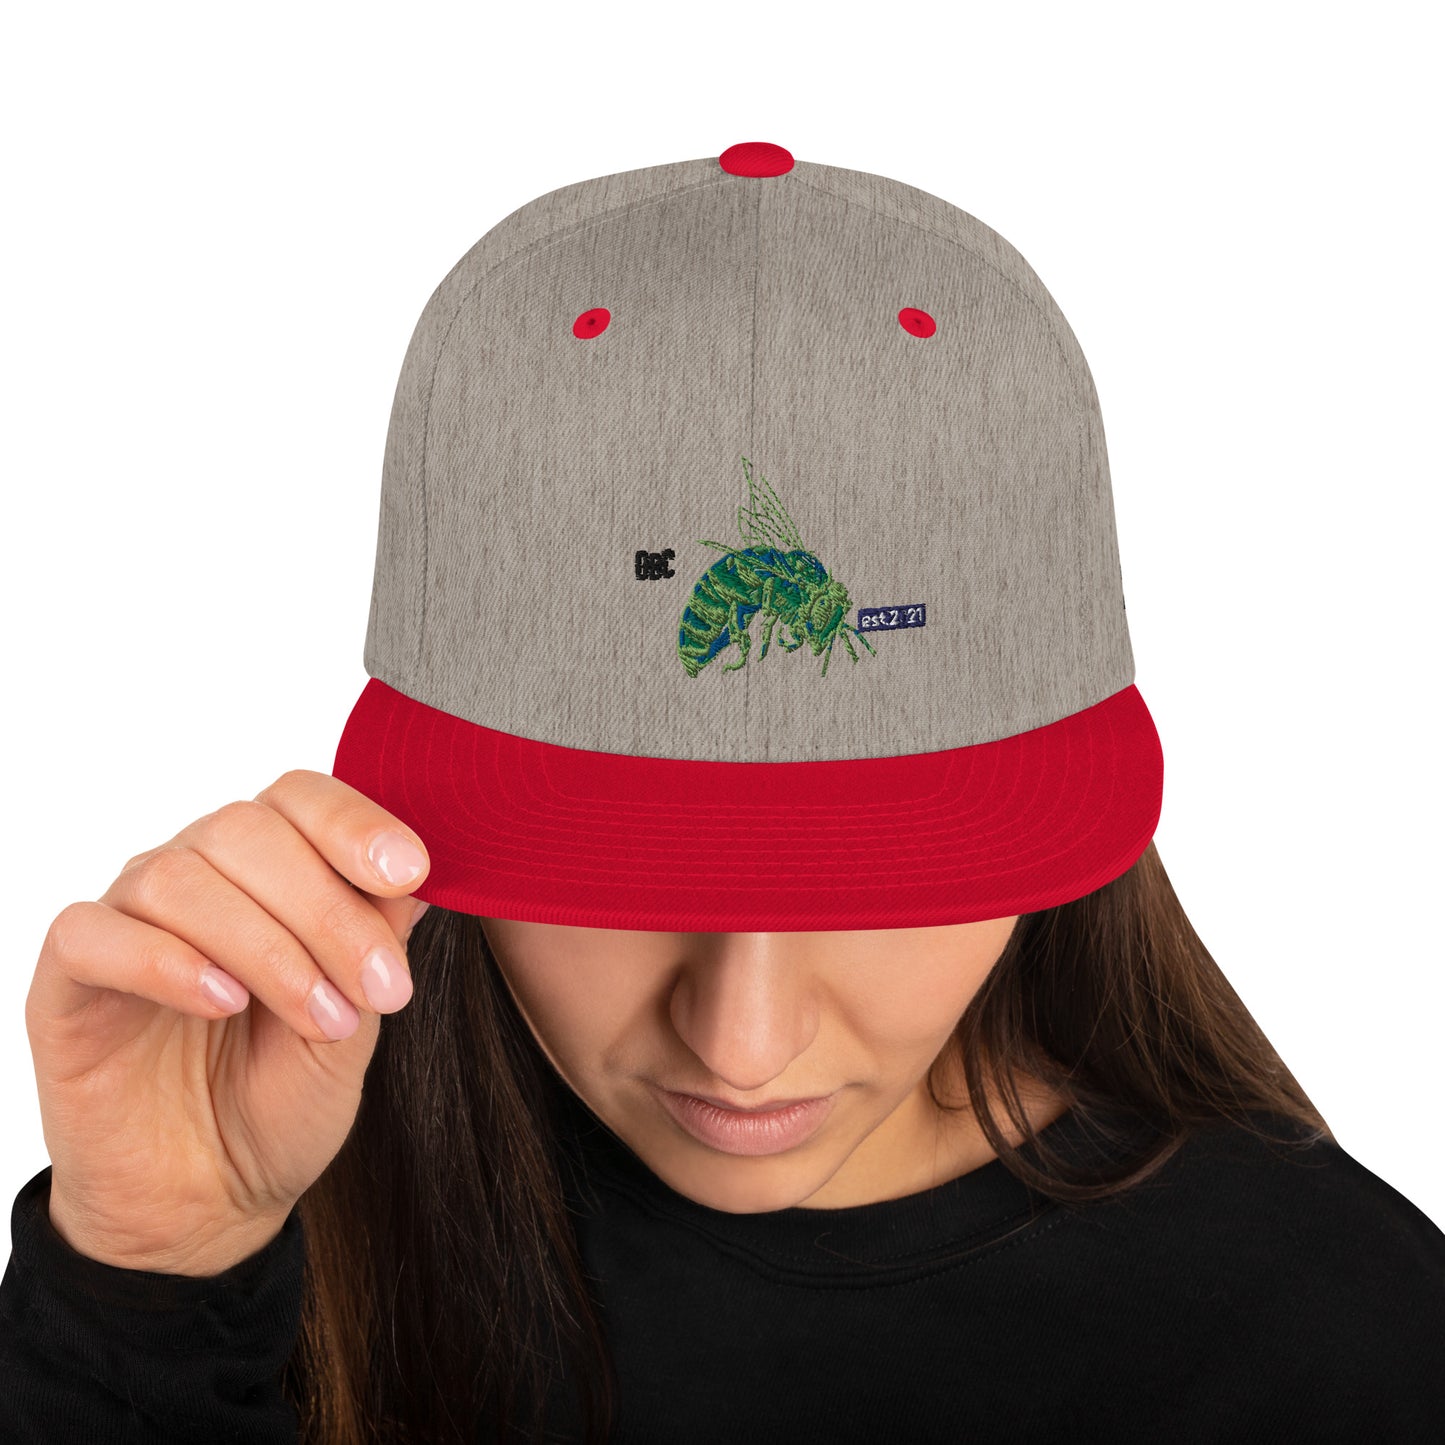 Damani Bee Snapback Hat